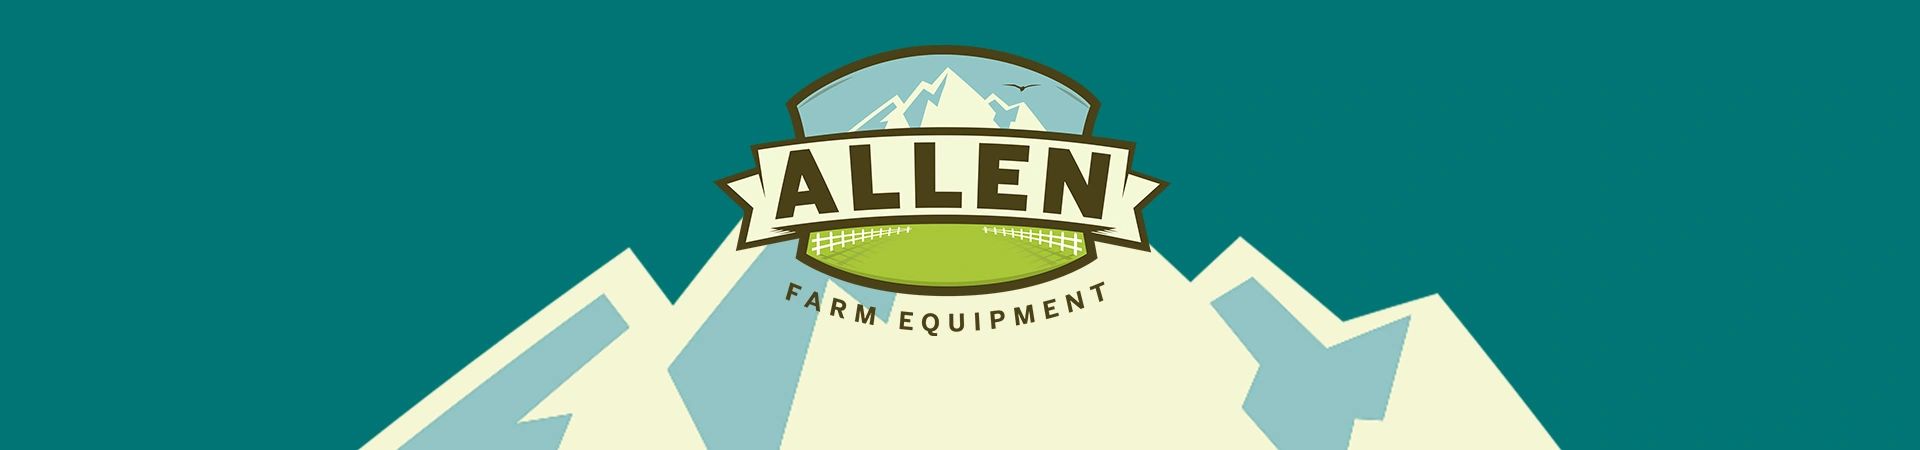 ALLEN FARM EQUIPMENT - The Worlds Best Agricultural Equipment